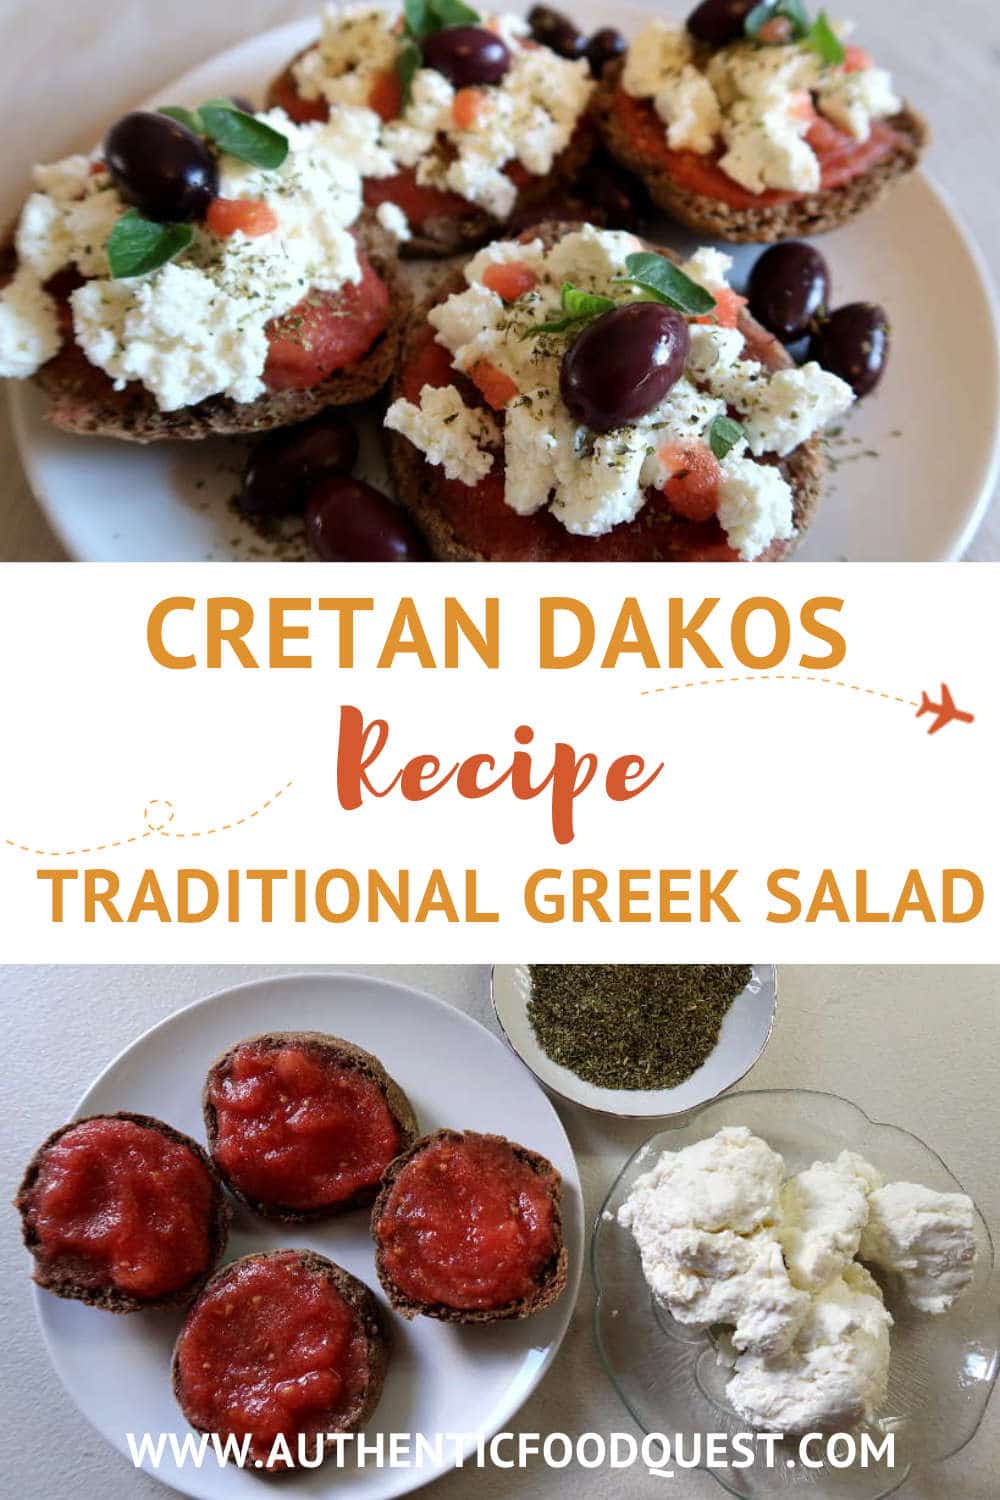 Cretan Dakos Recipe: The Best Authentic Cretan Salad You Want To Make